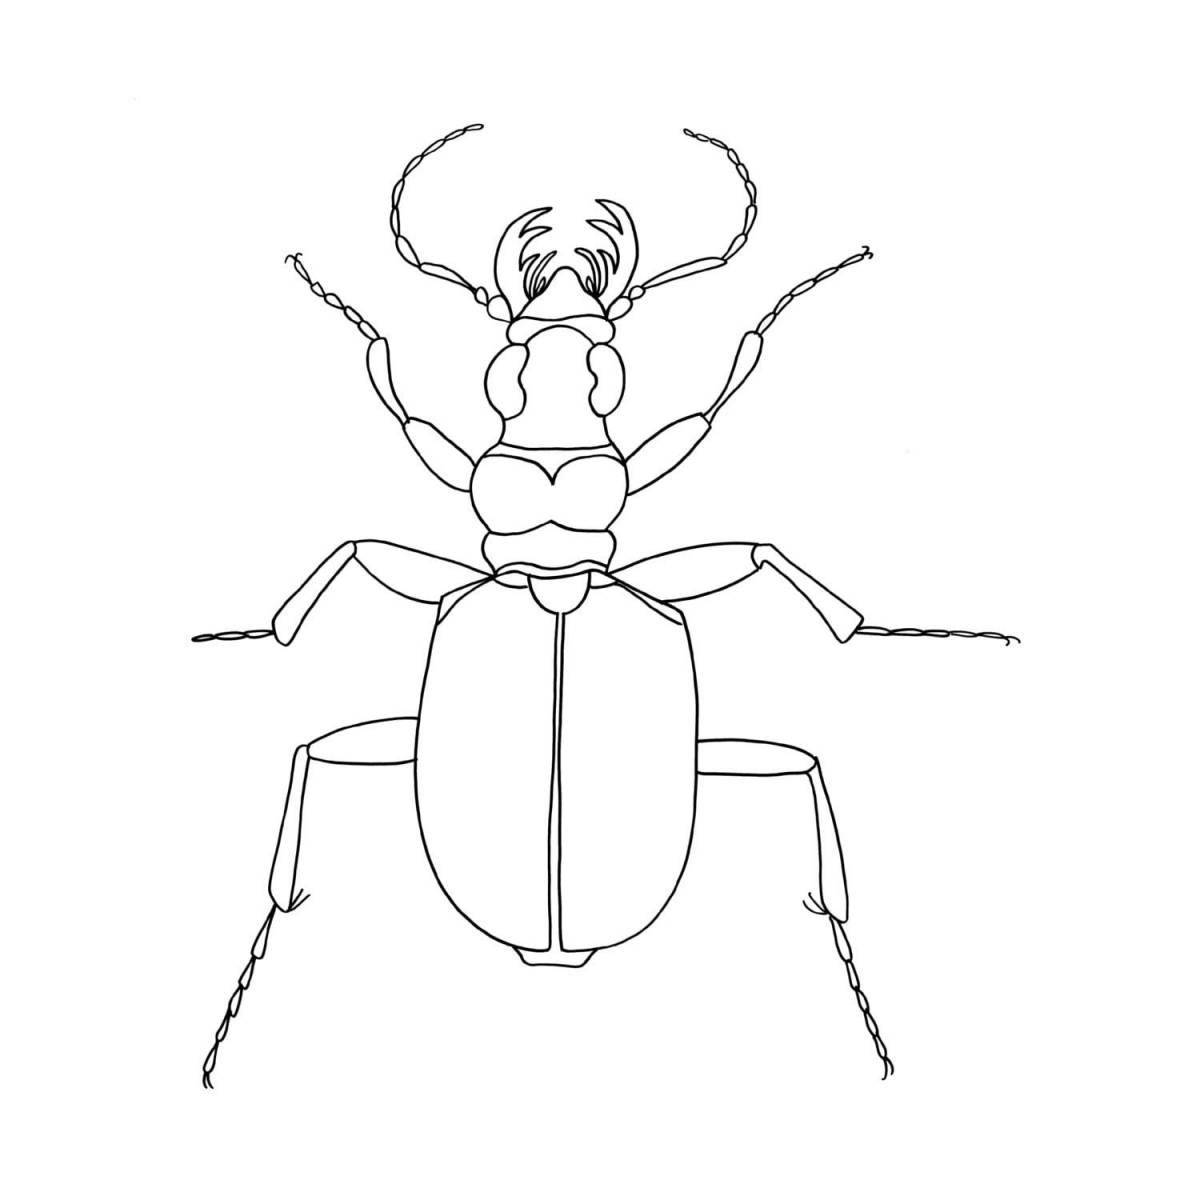 Stag beetle #15